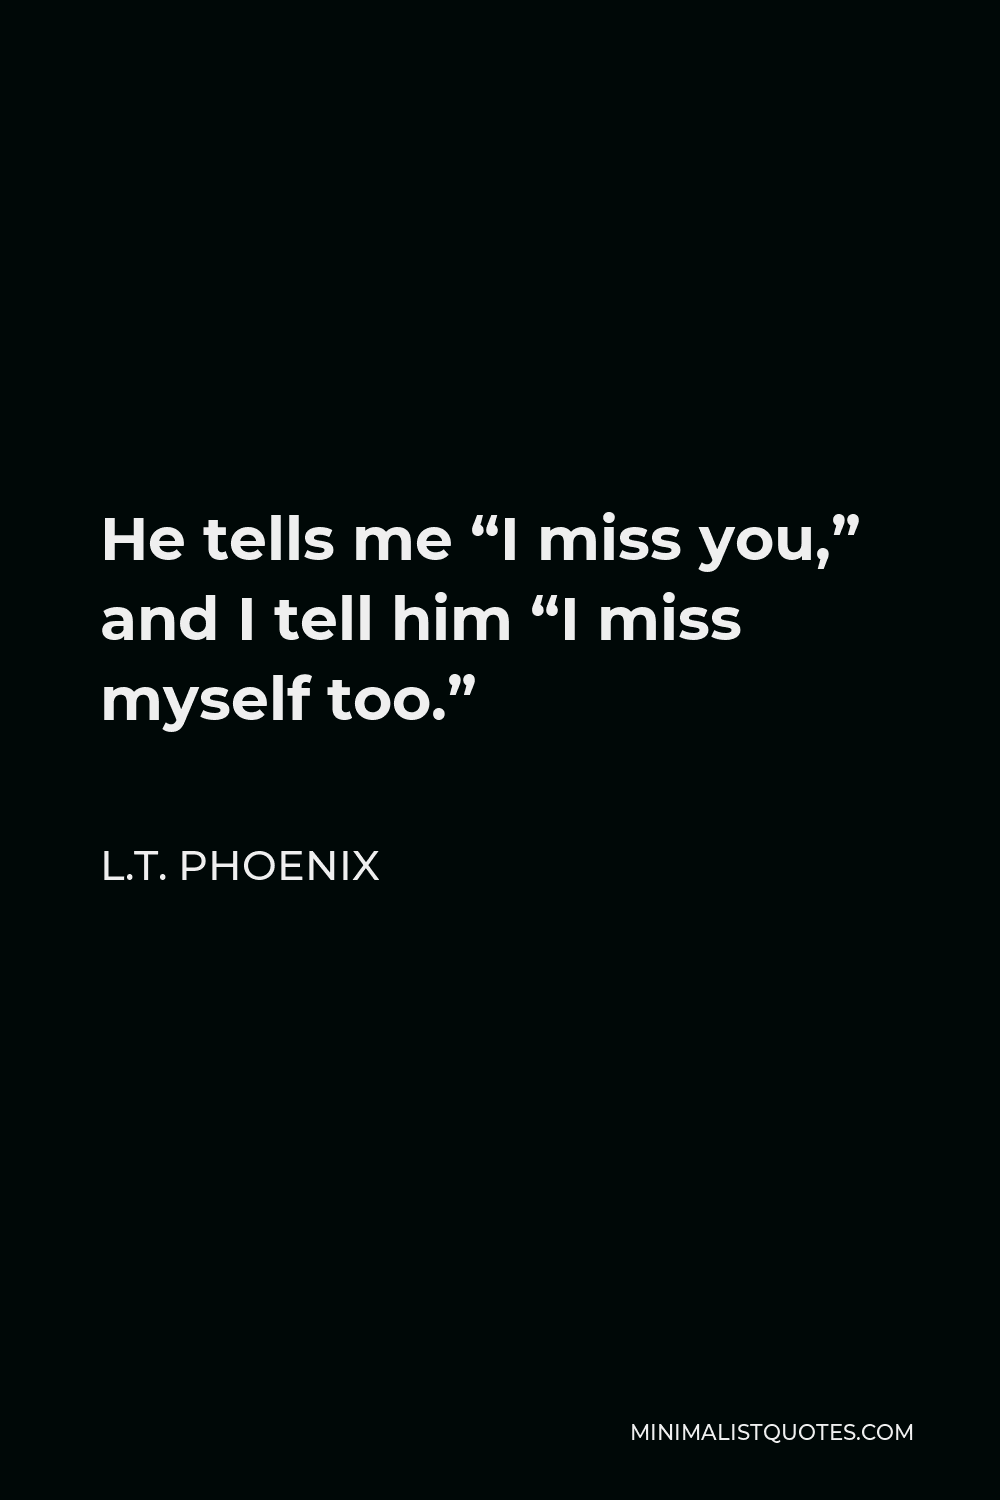 L.T. Phoenix Quote - He tells me “I miss you,” and I tell him “I miss myself too.”